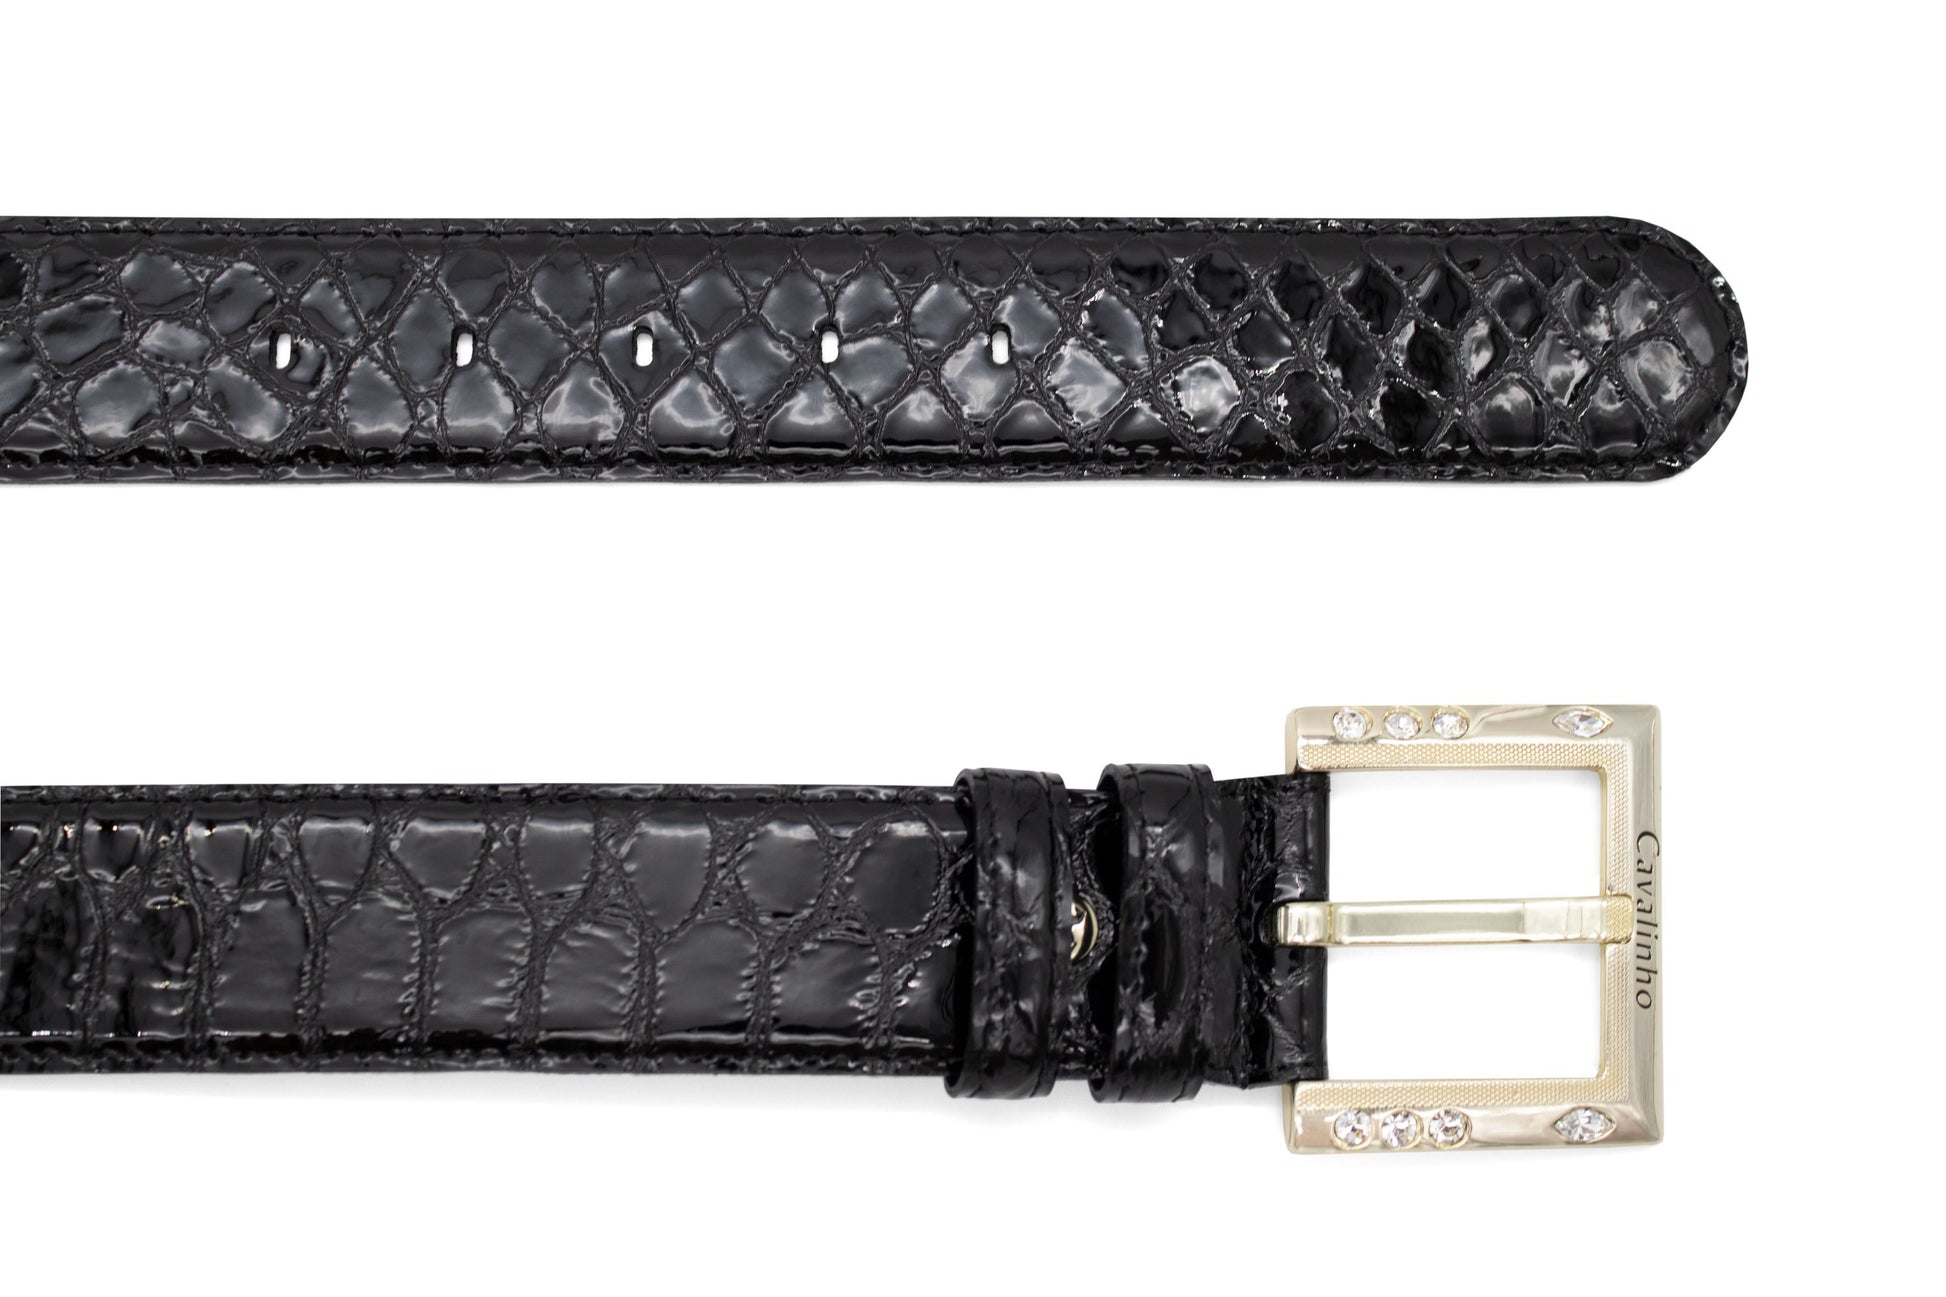 Cavalinho Galope Patent Leather Belt - Black Gold - 58010810.01_3